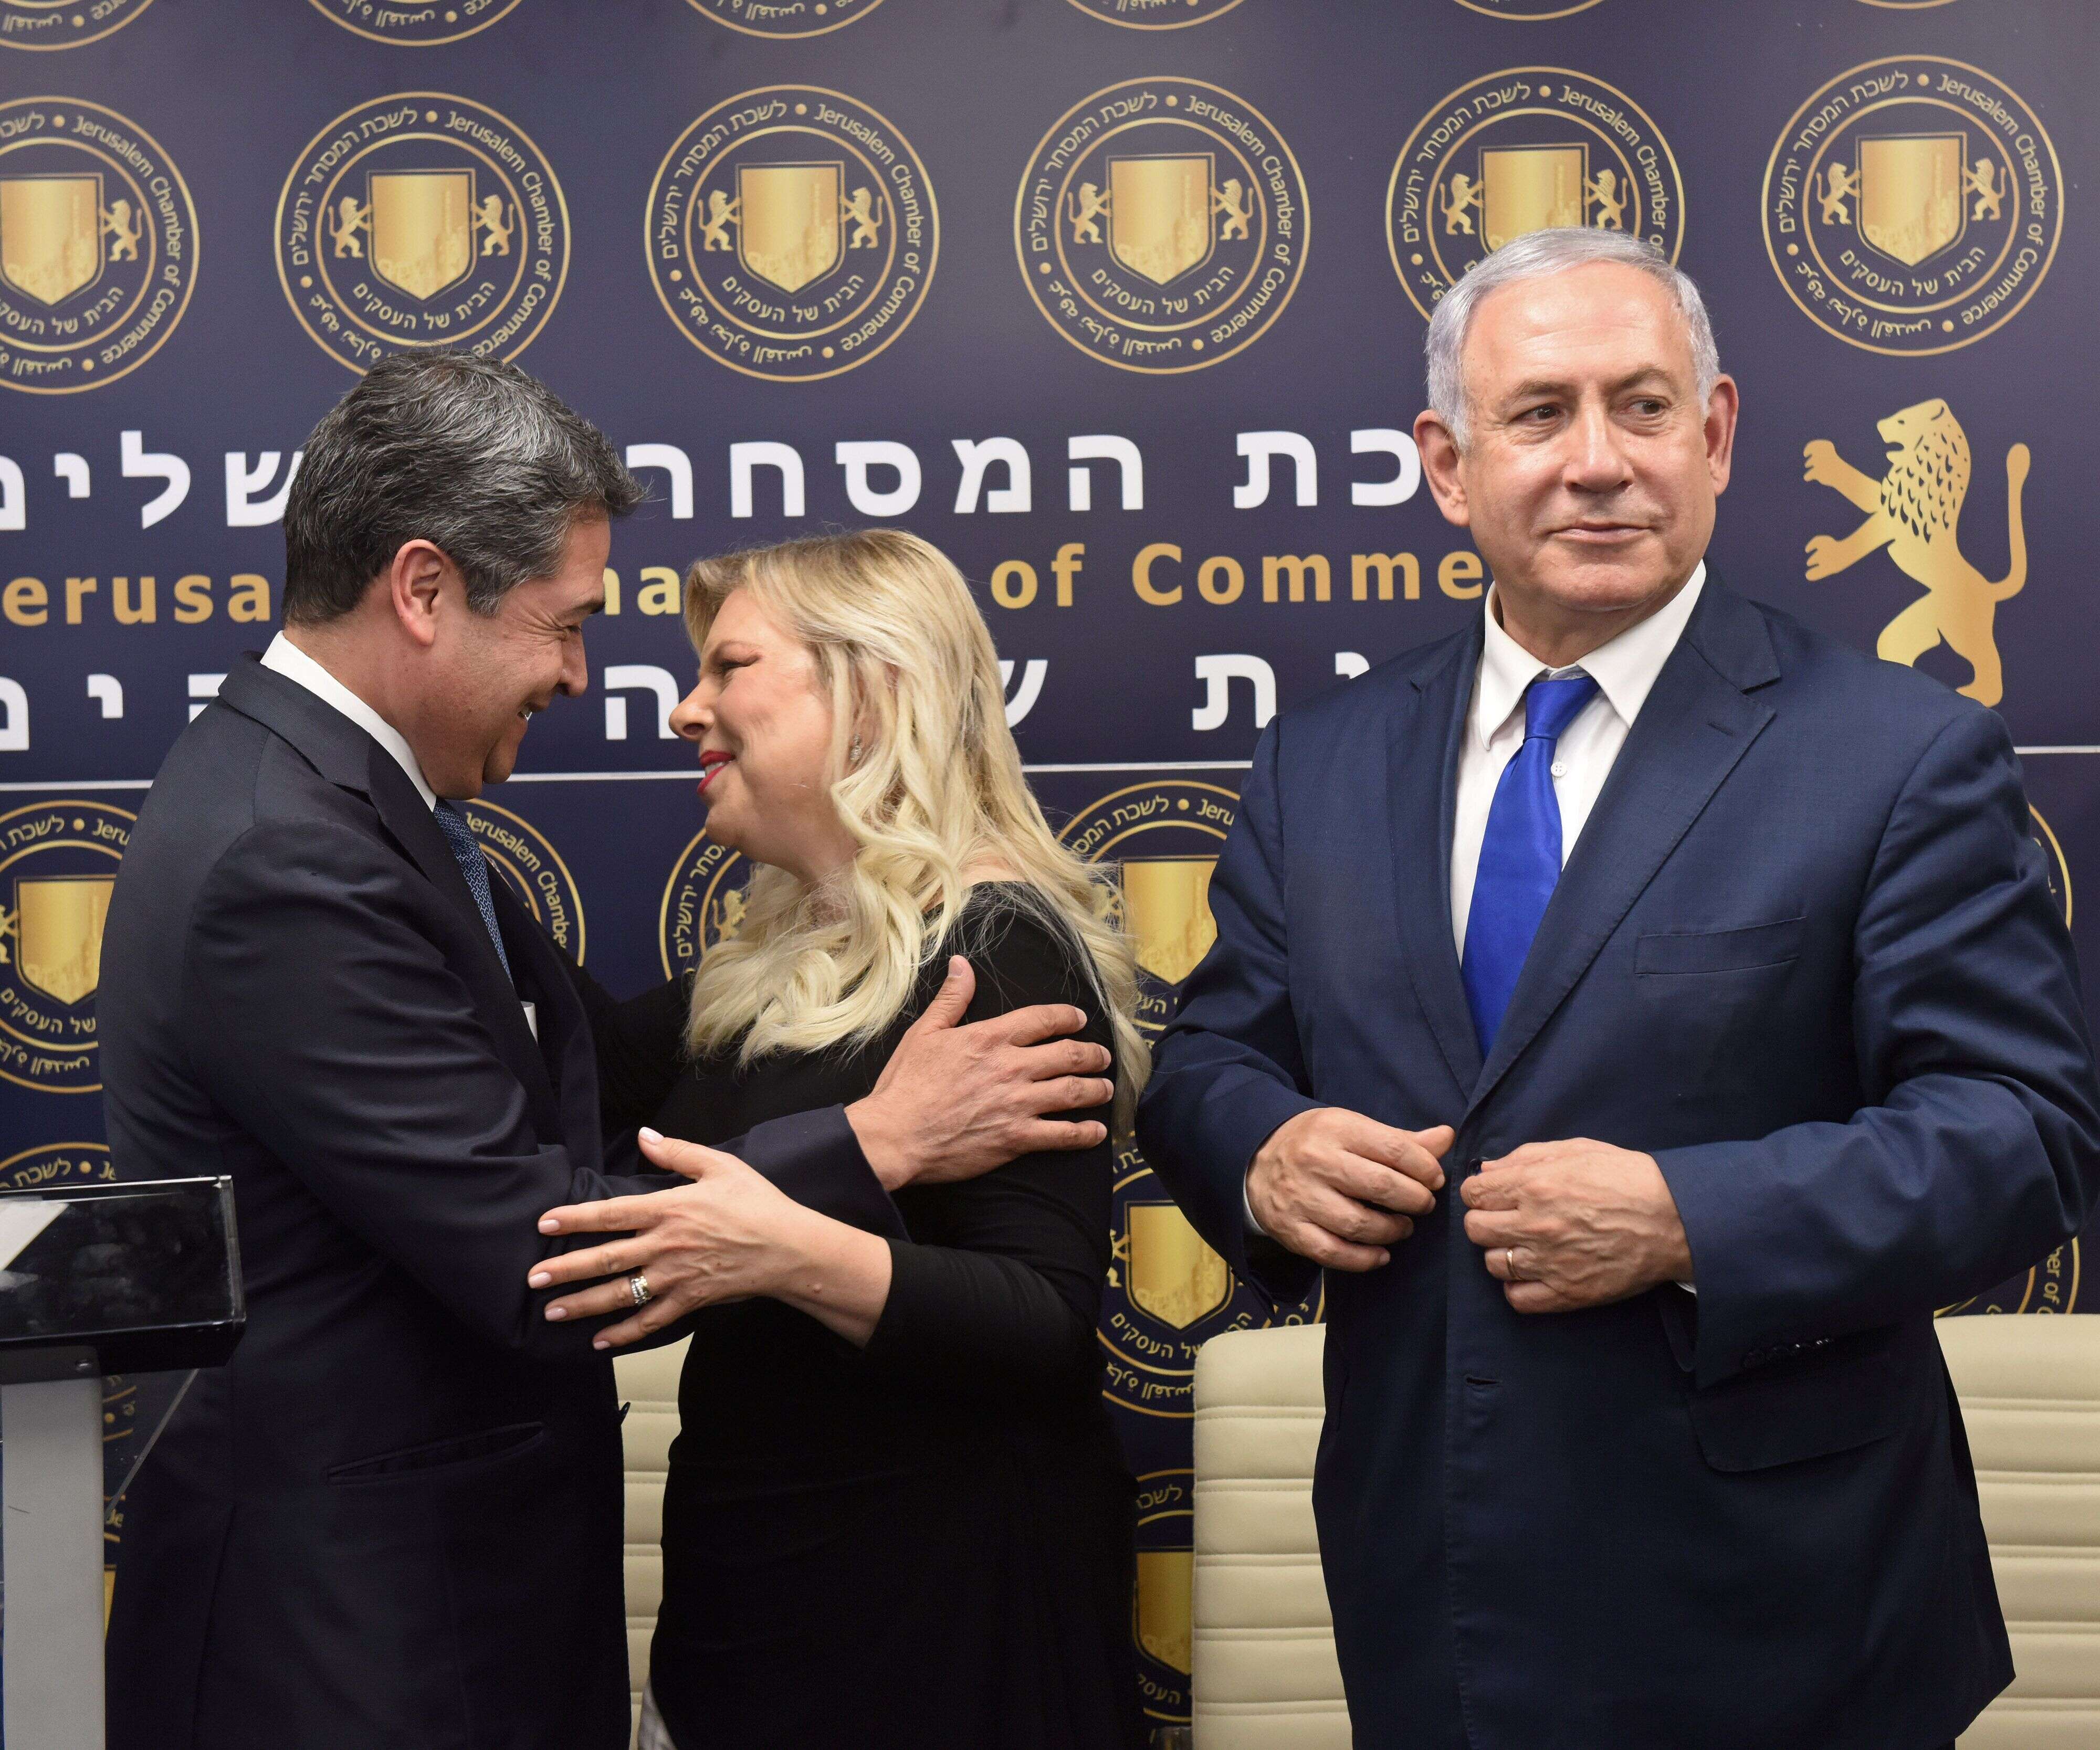 Juan Orlando Hernandez, président du Honduras, embrasse la femme de Benjamin Netanyahu qui est à droite de la photo